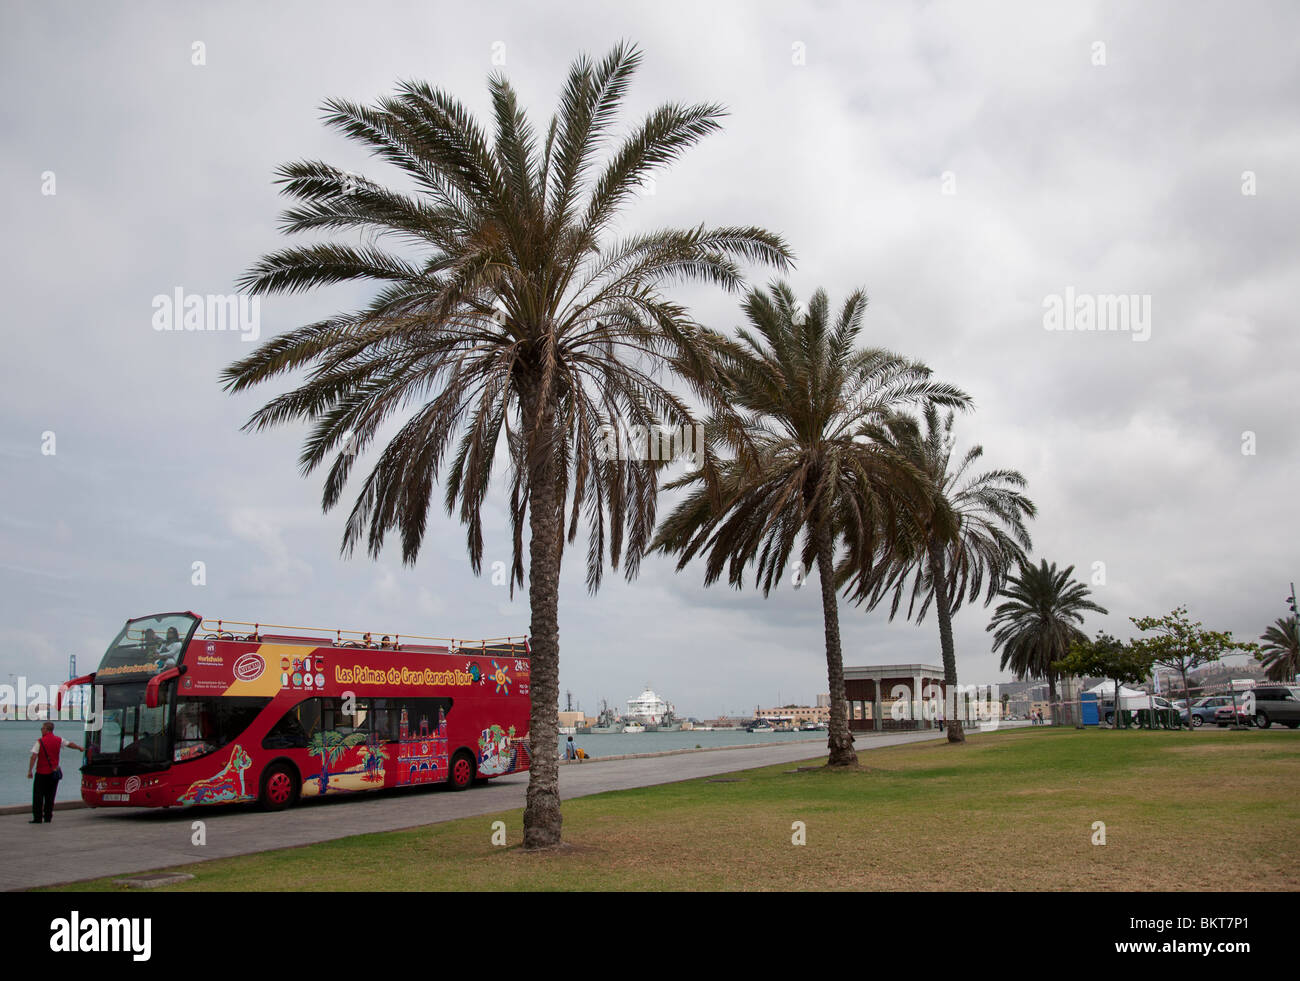 City Sightseeing Tour Bus in Las Palmas, Gran Canaria. Stock Photo